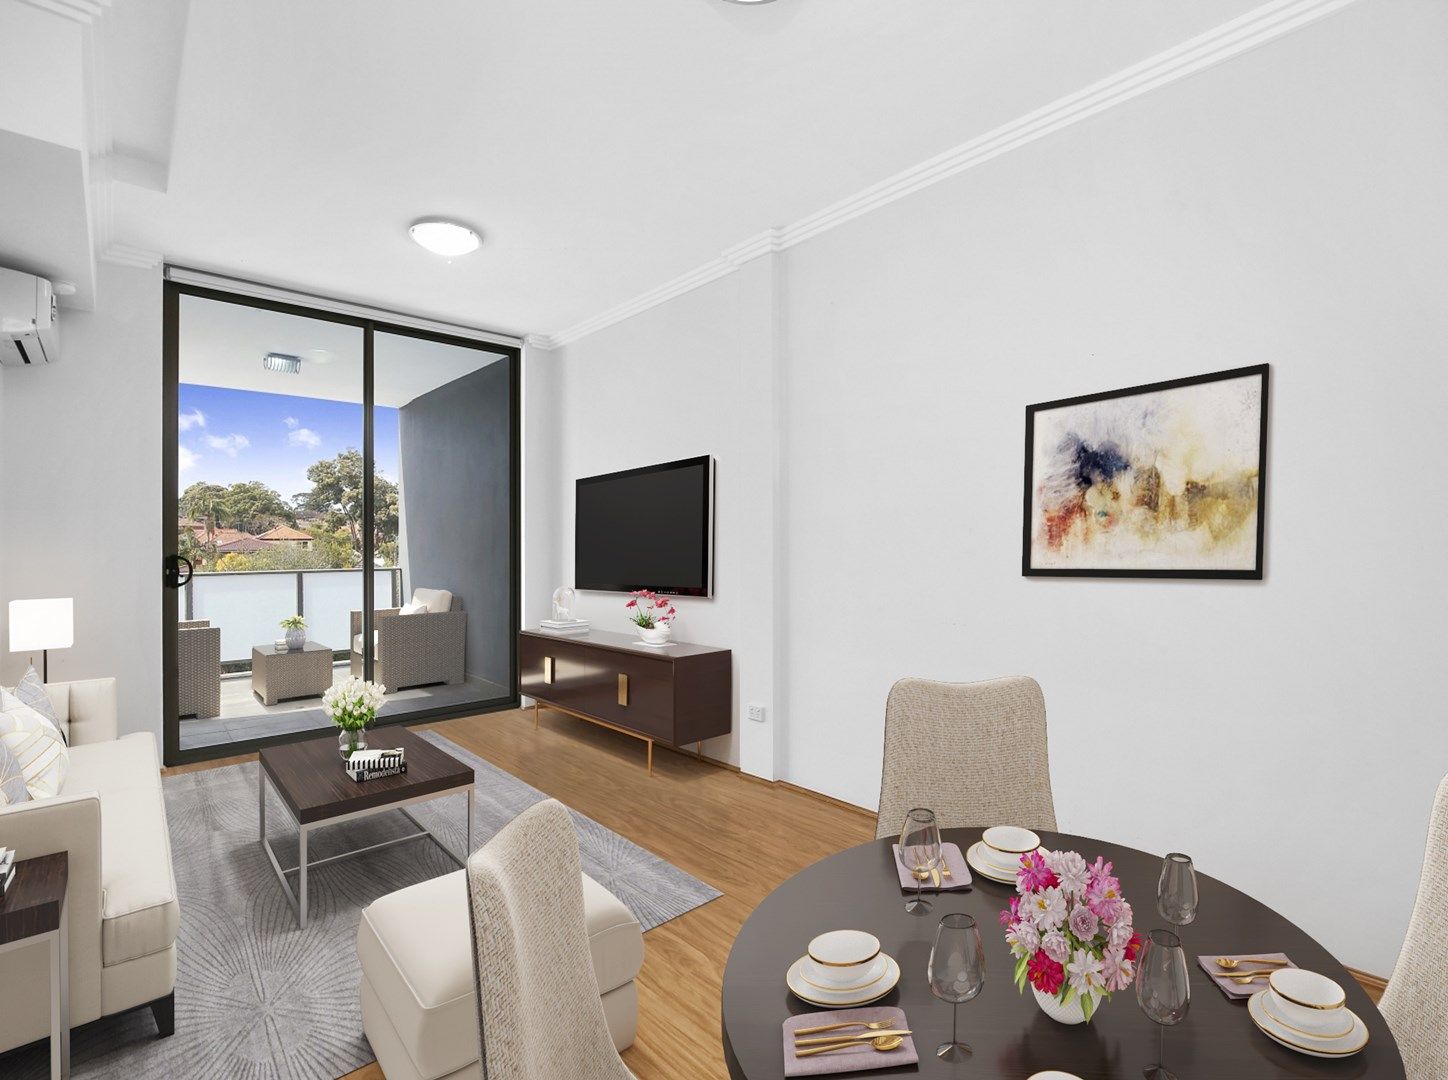 2 bedrooms Apartment / Unit / Flat in 2 Bed/71 Gray Street KOGARAH NSW, 2217